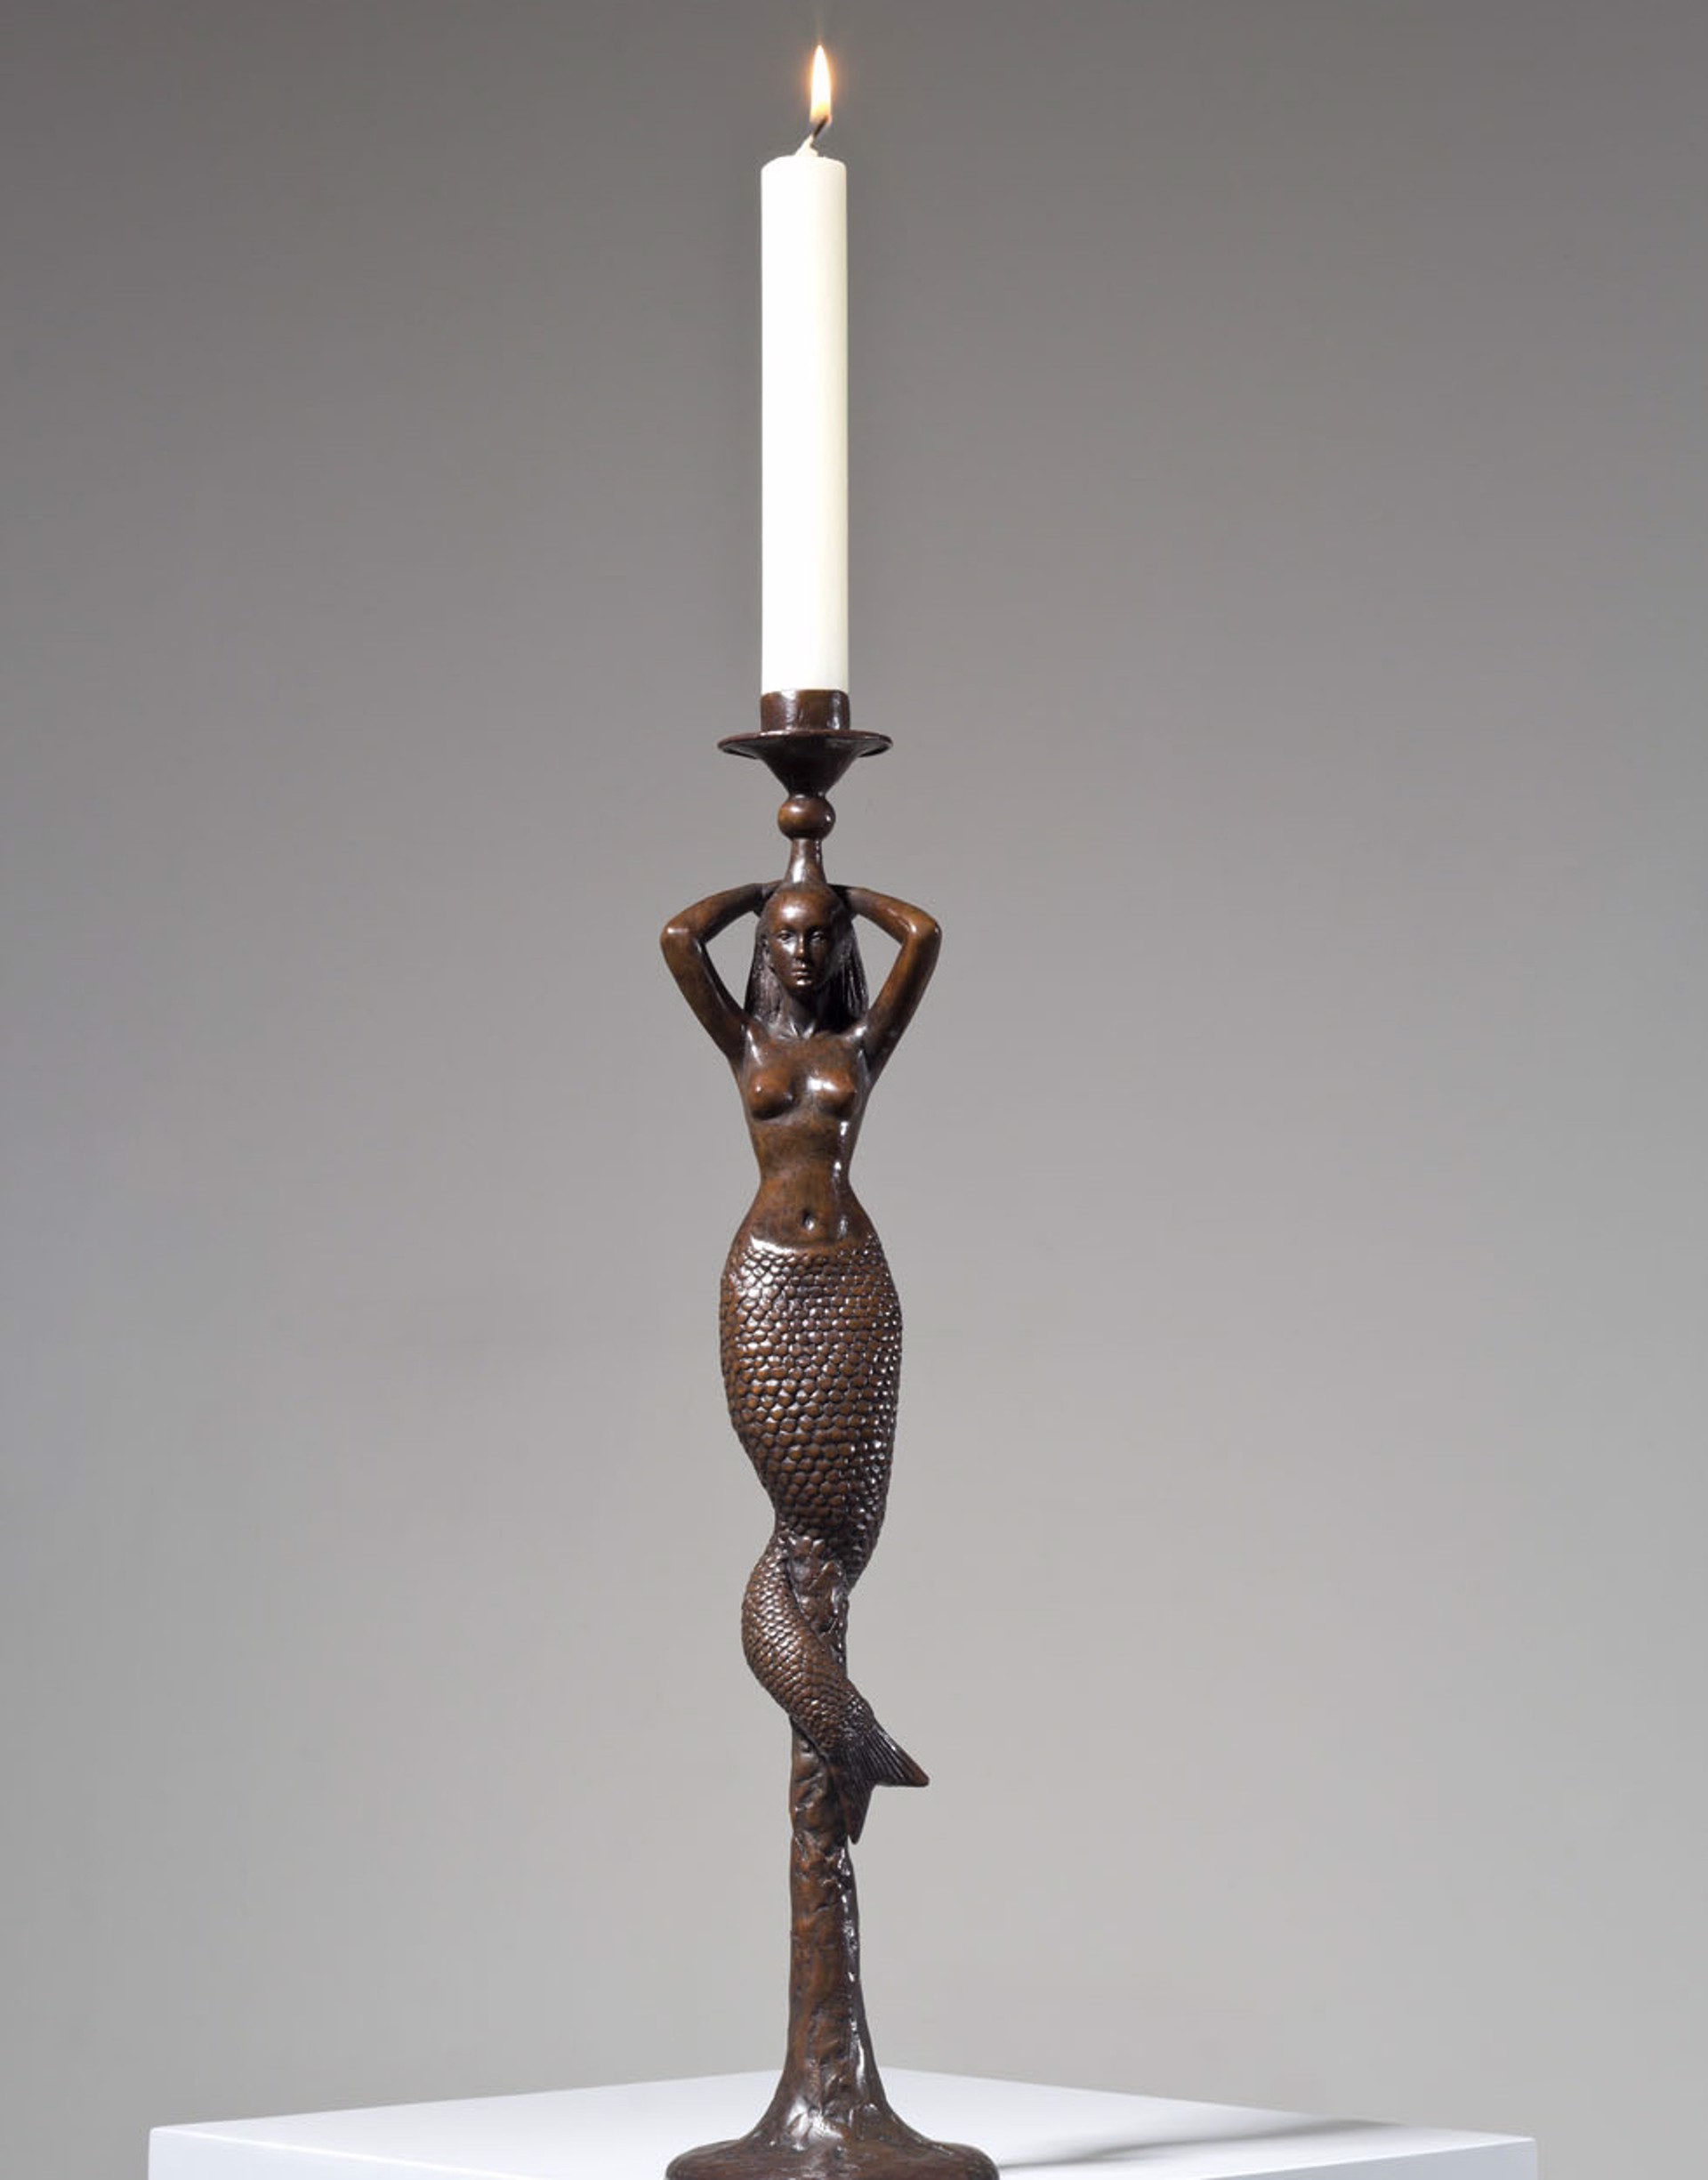 Mermaid Candlestick - small by Sergio Bustamante (sculptor)